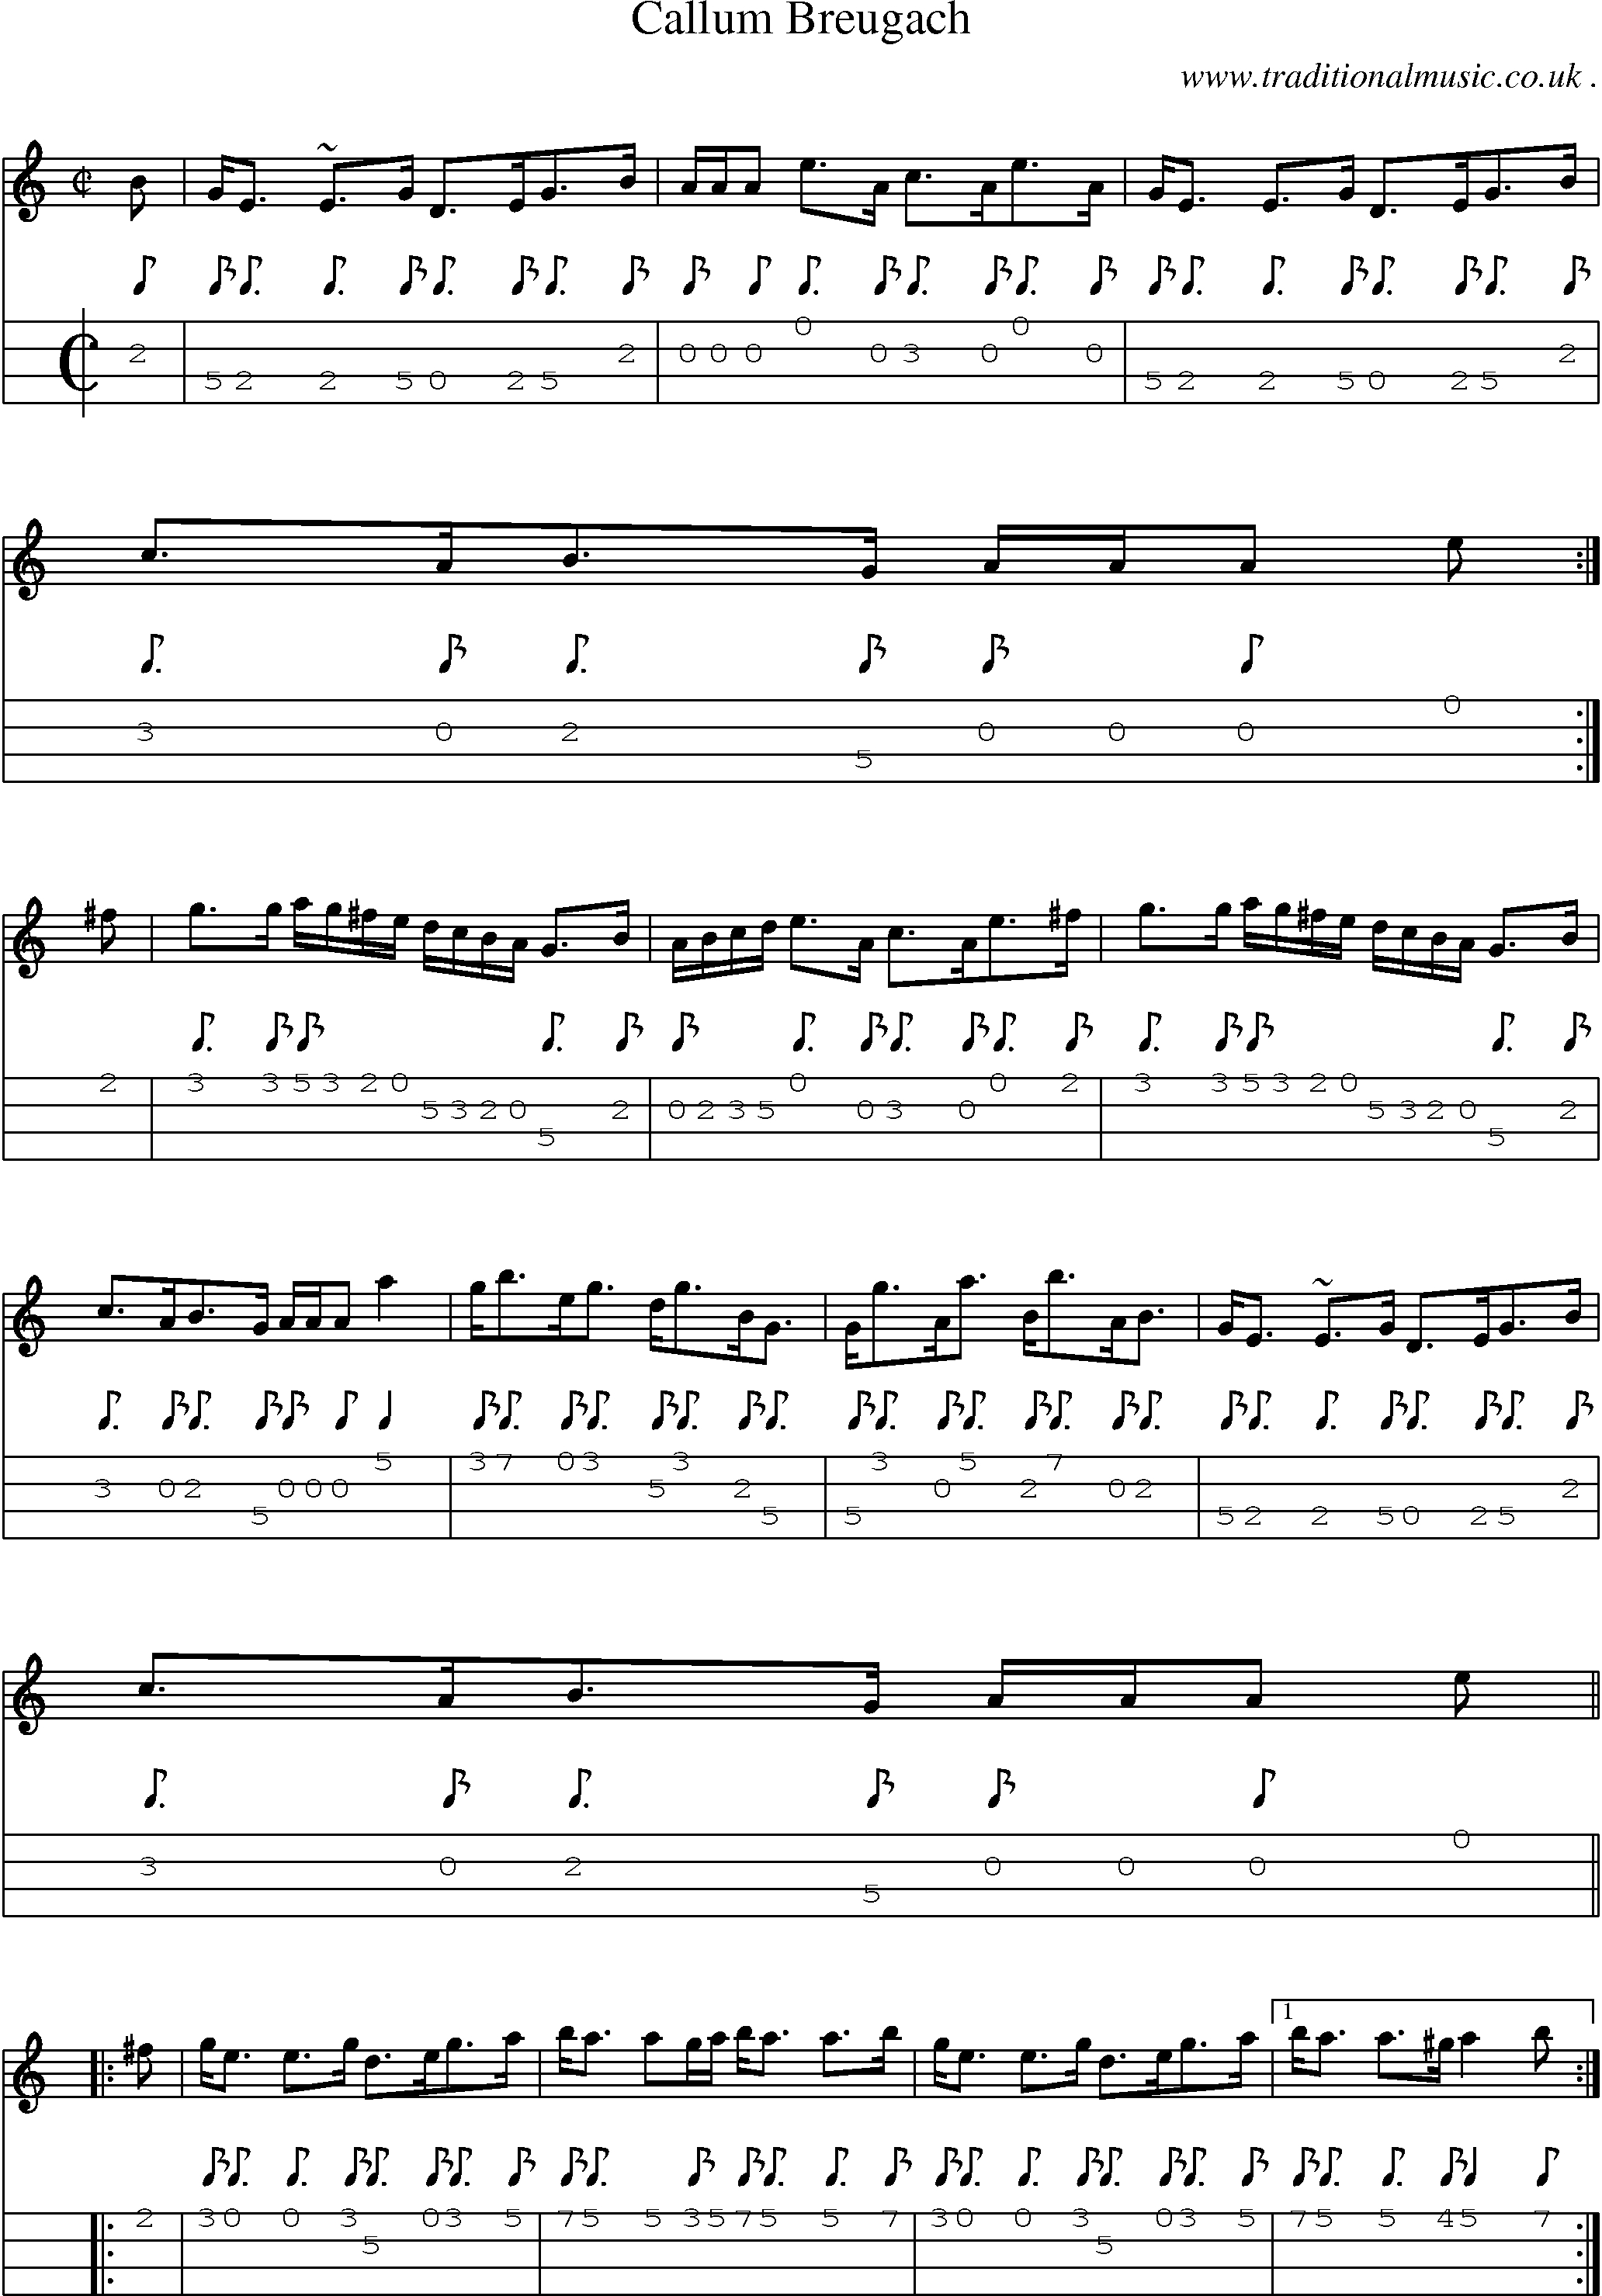 Sheet-music  score, Chords and Mandolin Tabs for Callum Breugach